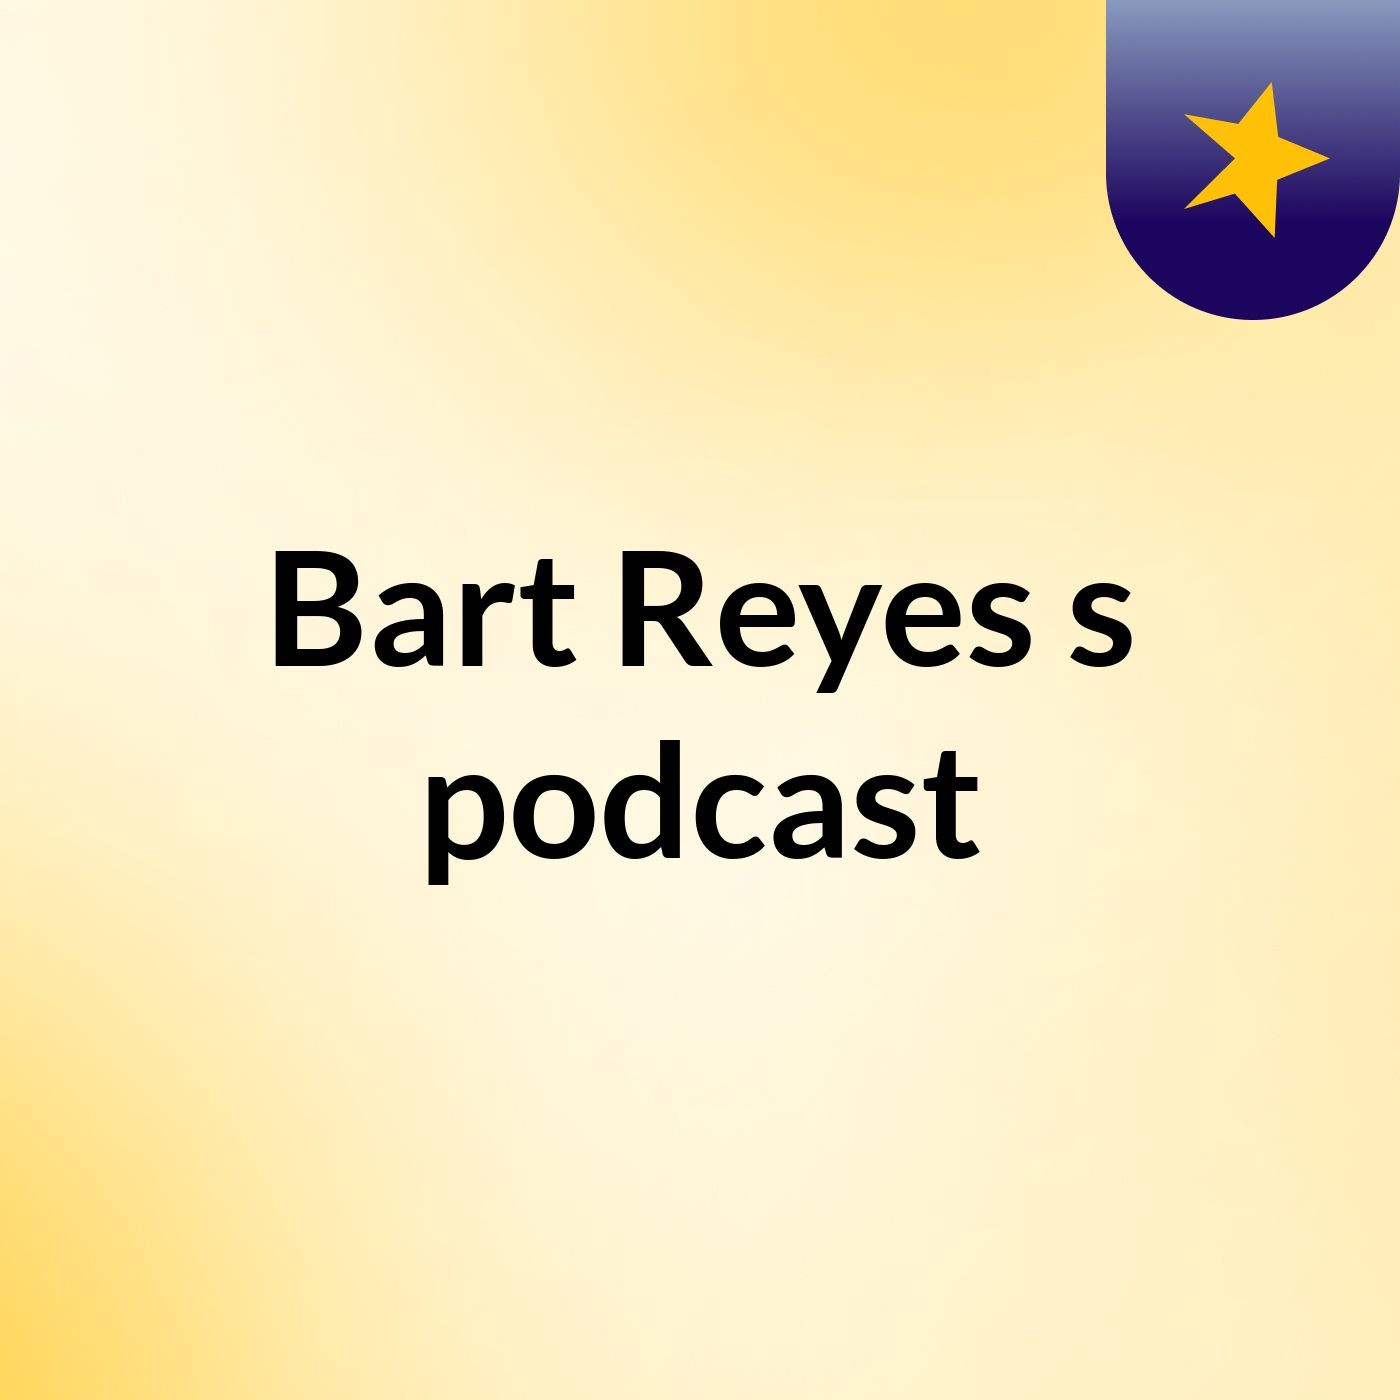 Bart Reyes's podcast